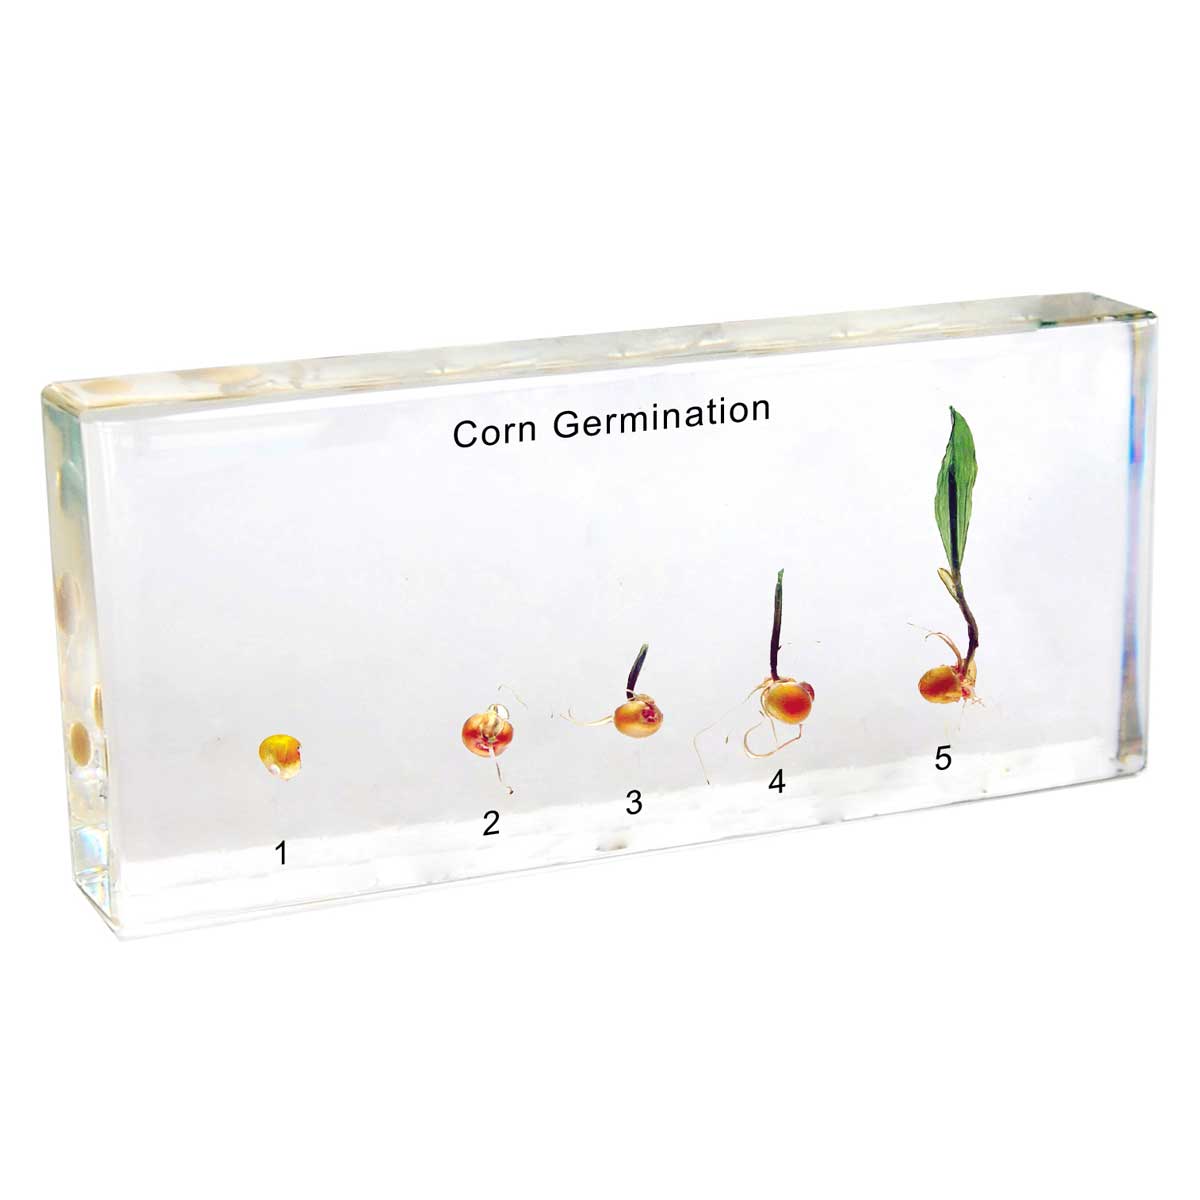 Corn Germination Life Cycle Specimens